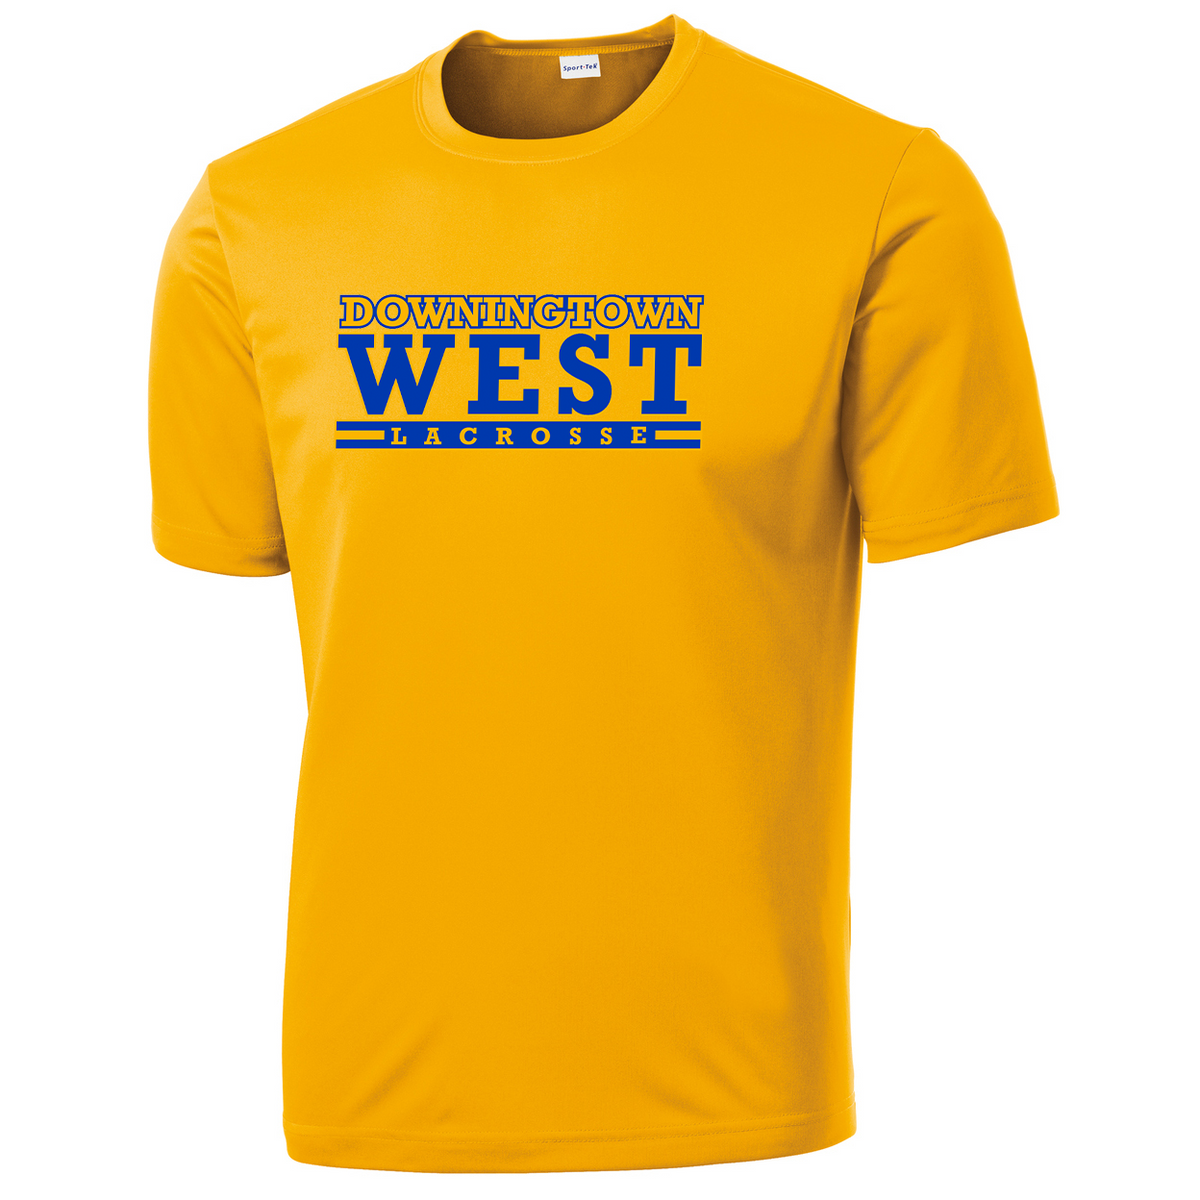 Downingtown West Lacrosse Performance T-Shirt